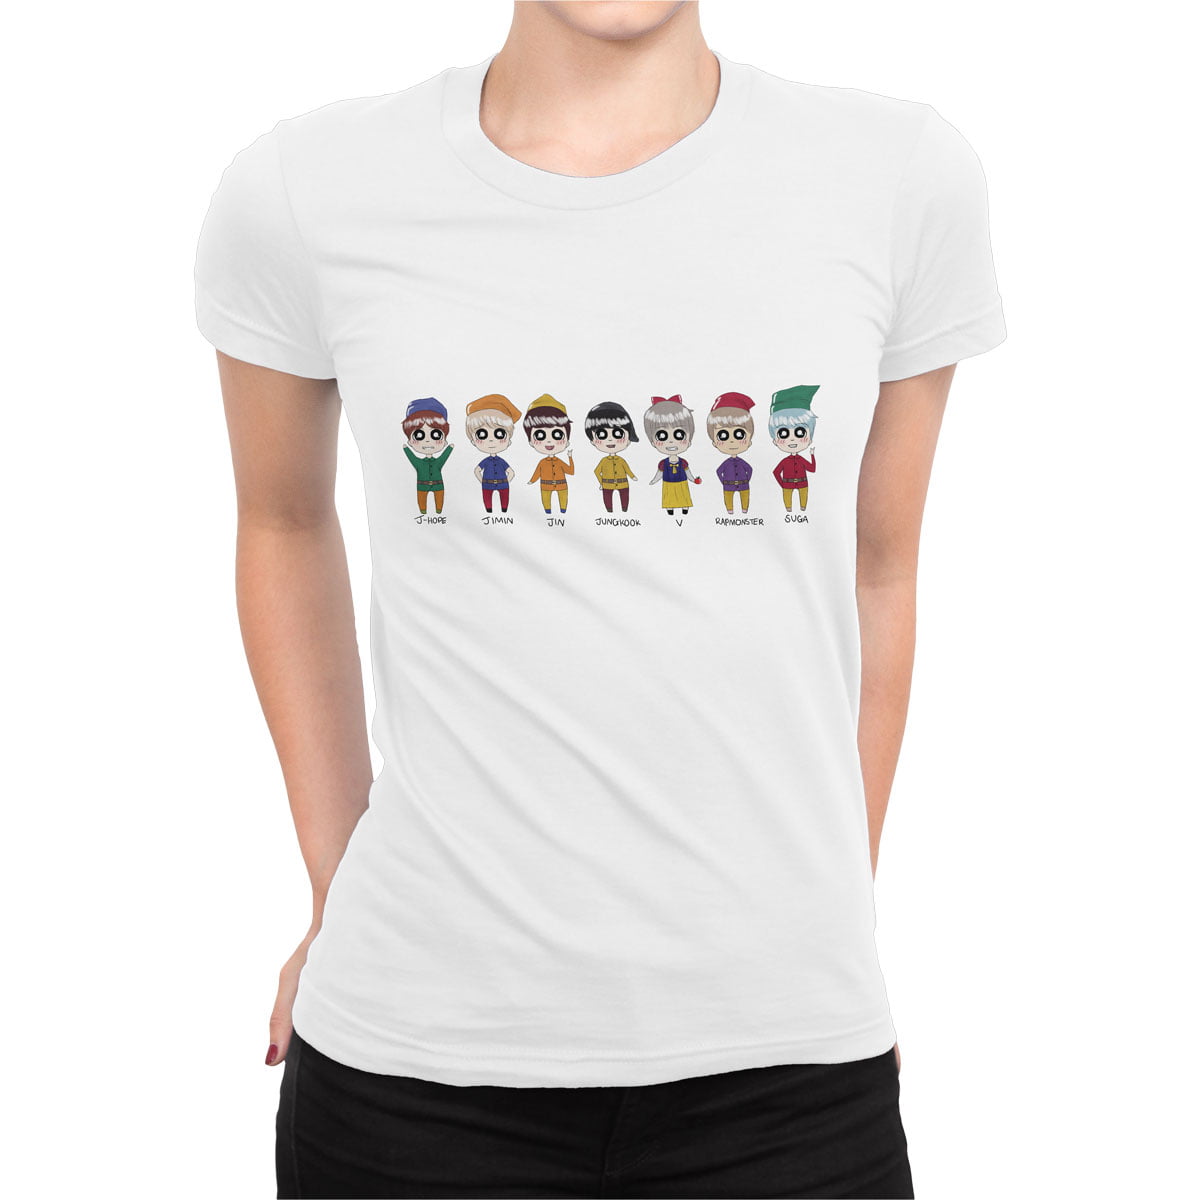 Bts chibi all komik tasarim kadin tisort b - bts chibi special no2 kadın t-shirt - figurex